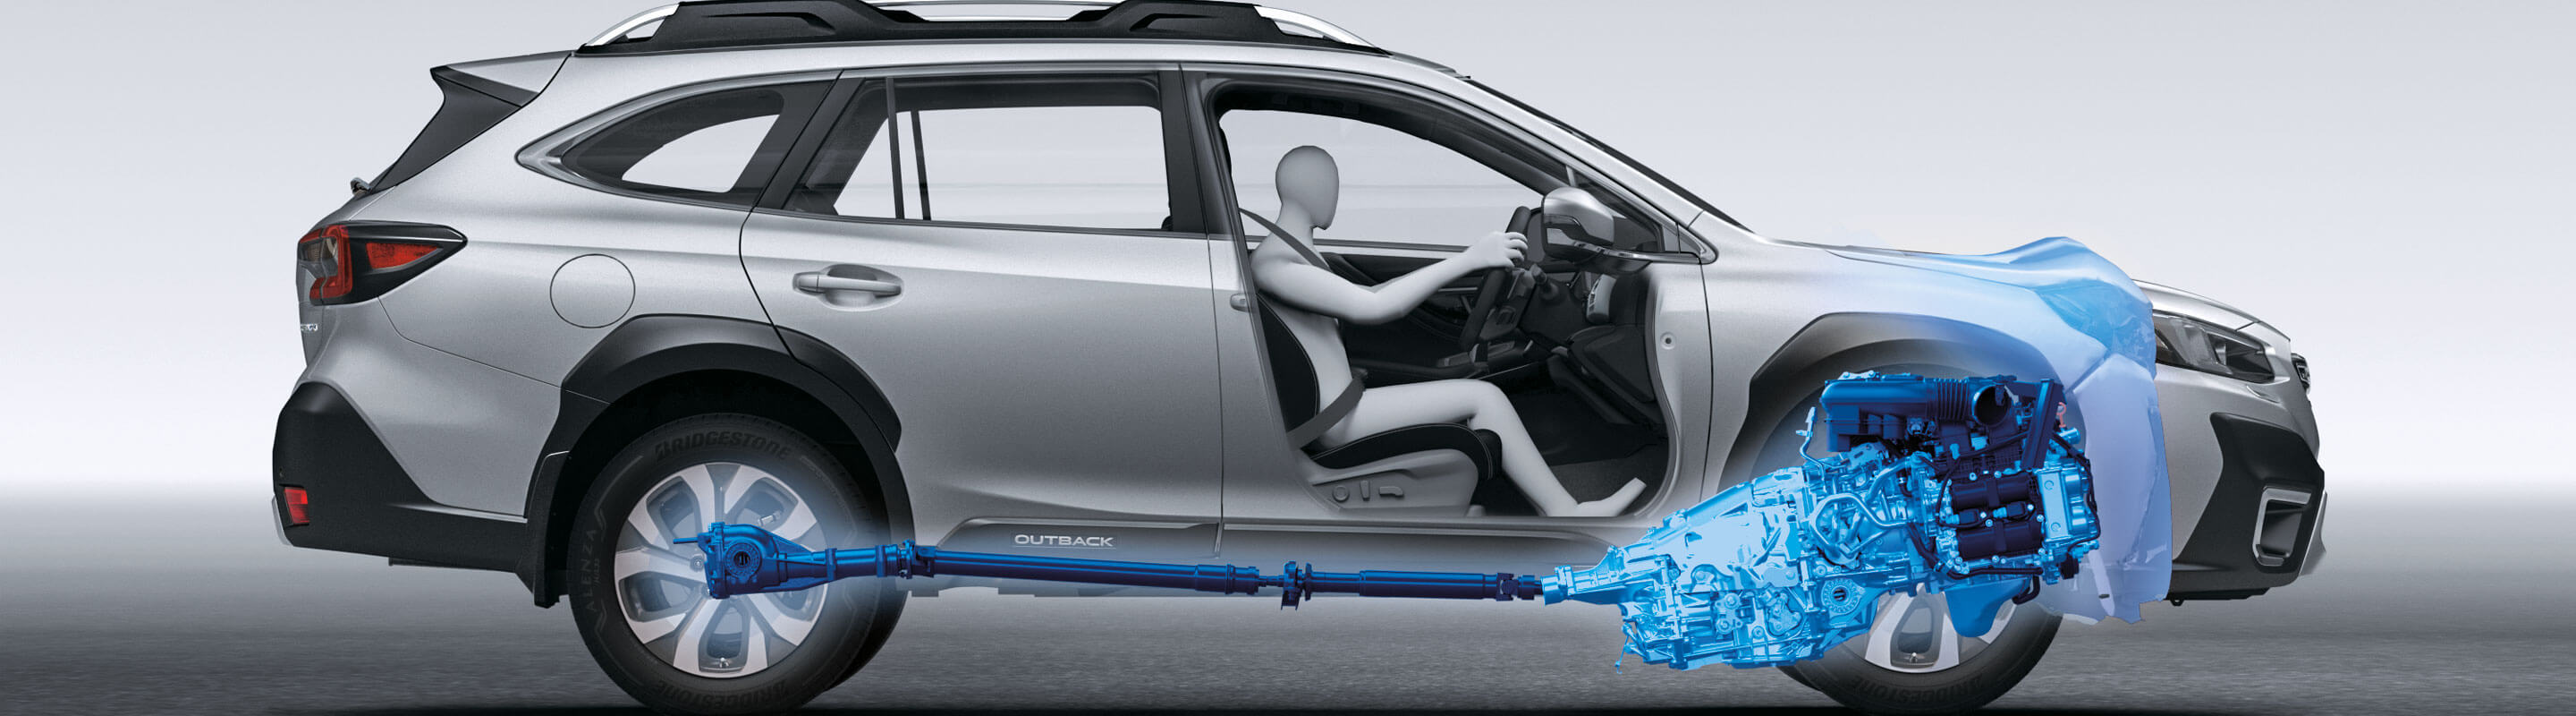 Subaru Outback Safety Features | Subaru Australia